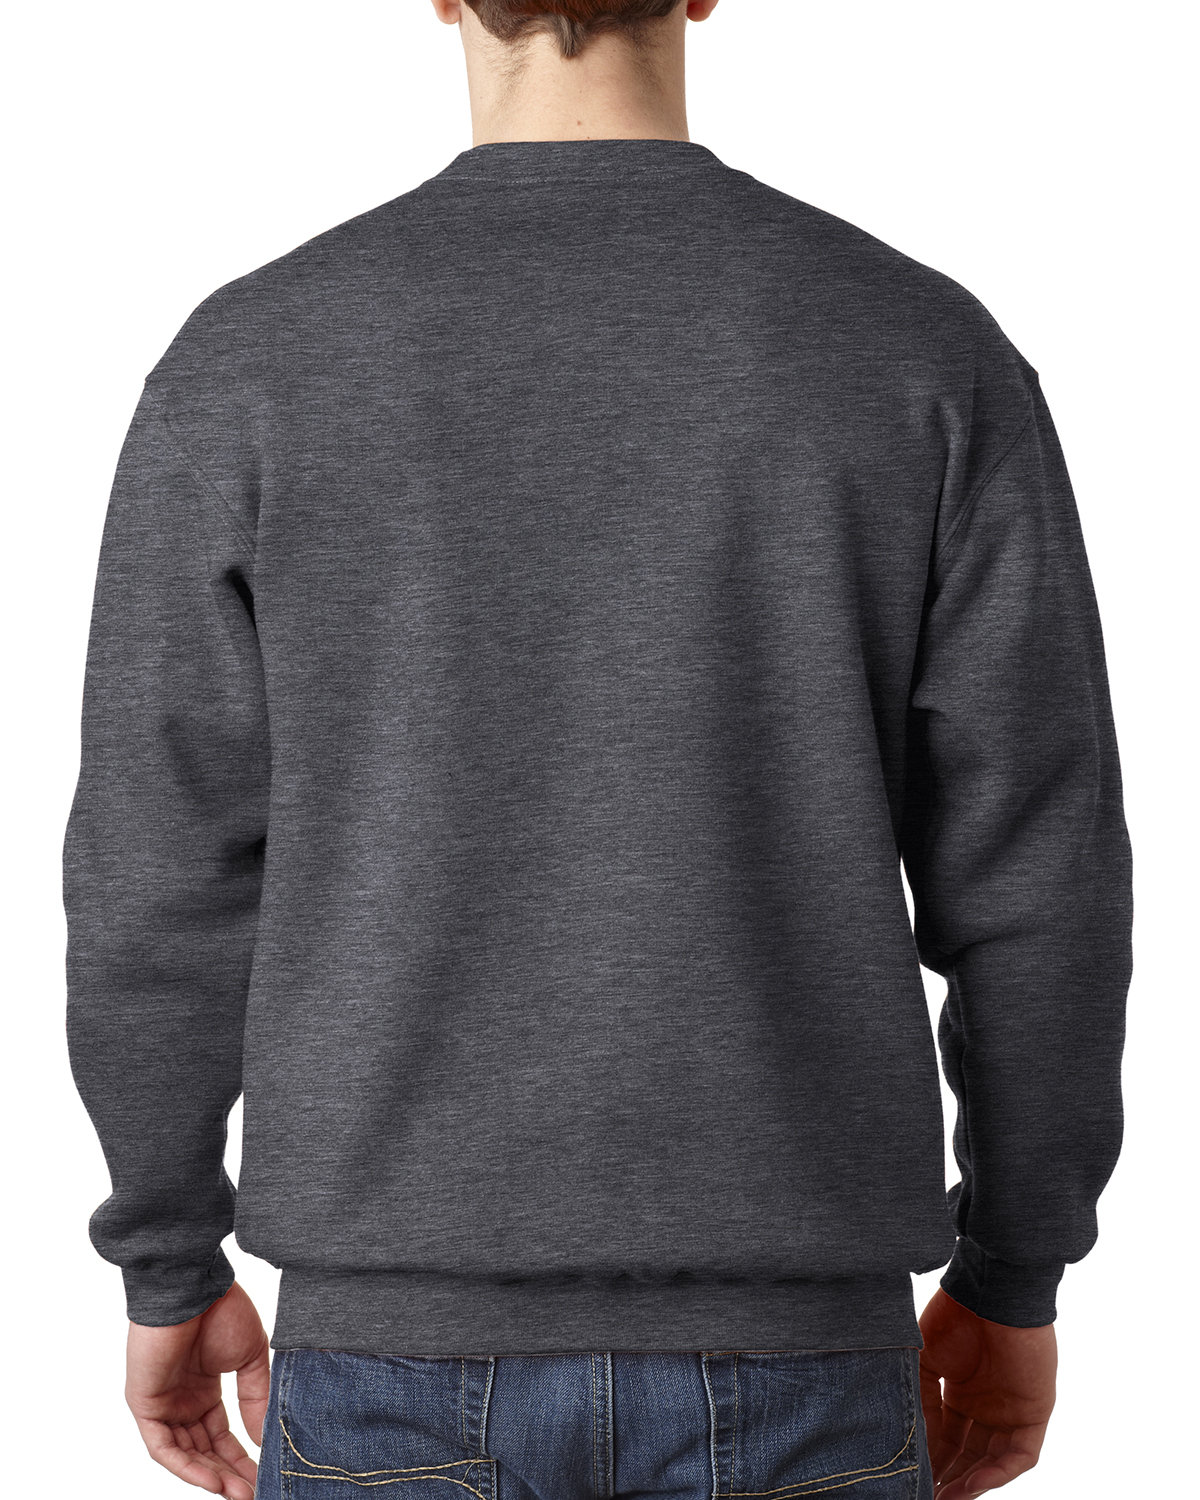 Adult Crewneck Sweatshirt - GREY - XL